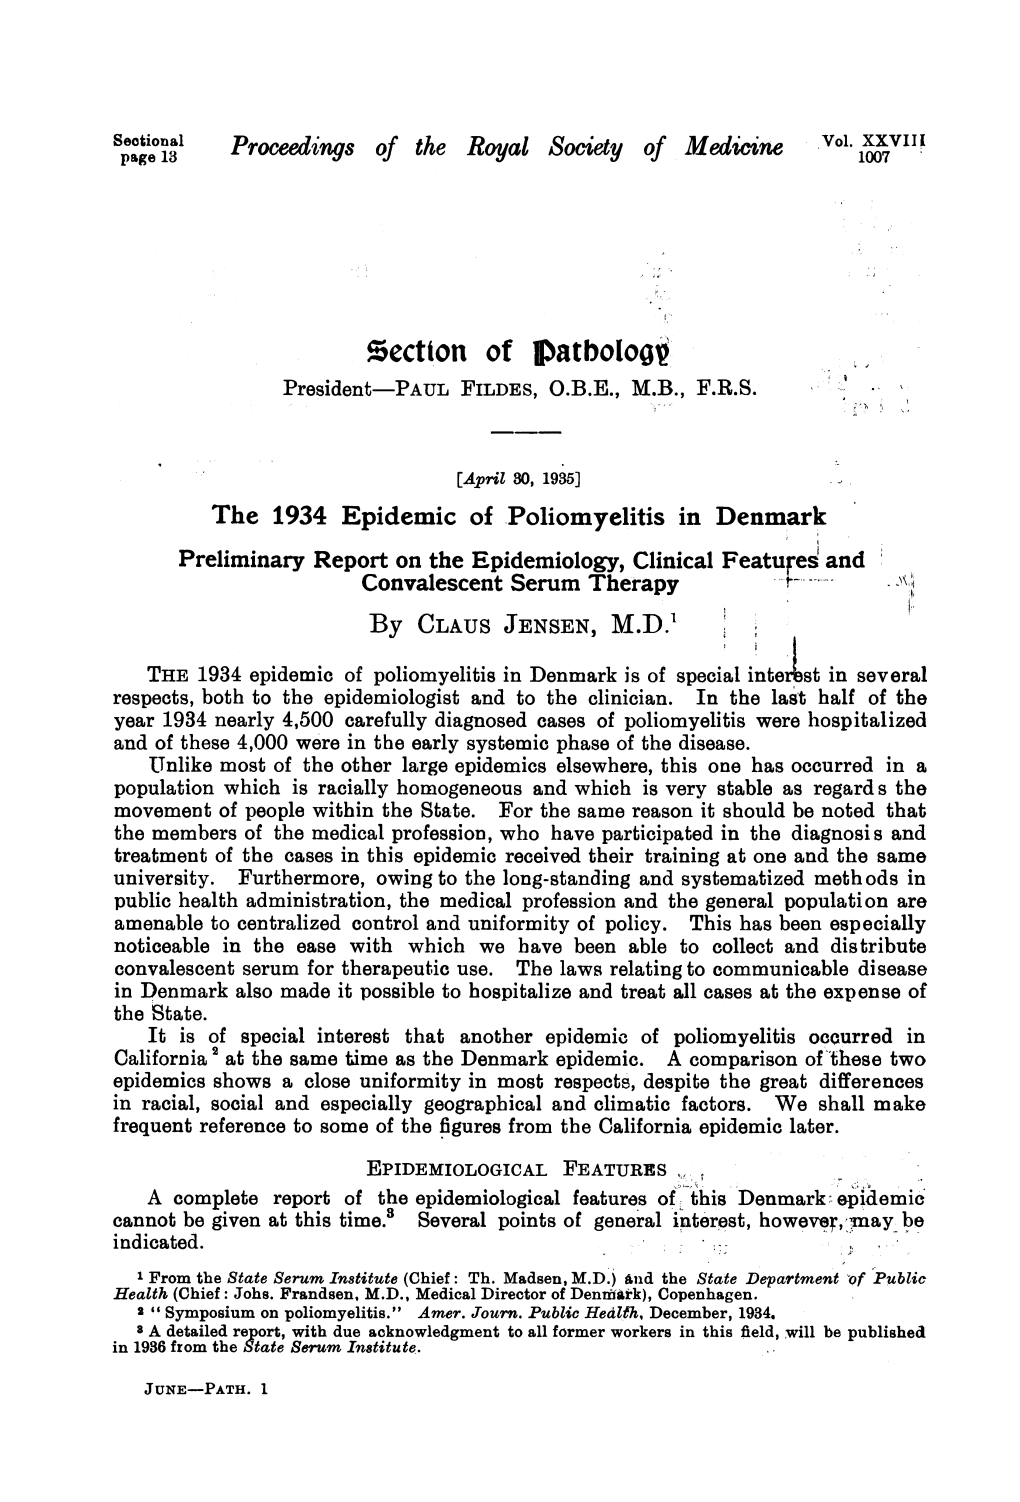 The 1934 Epidemic of Poliomyelitis in Denmark. Preliminary Report on The